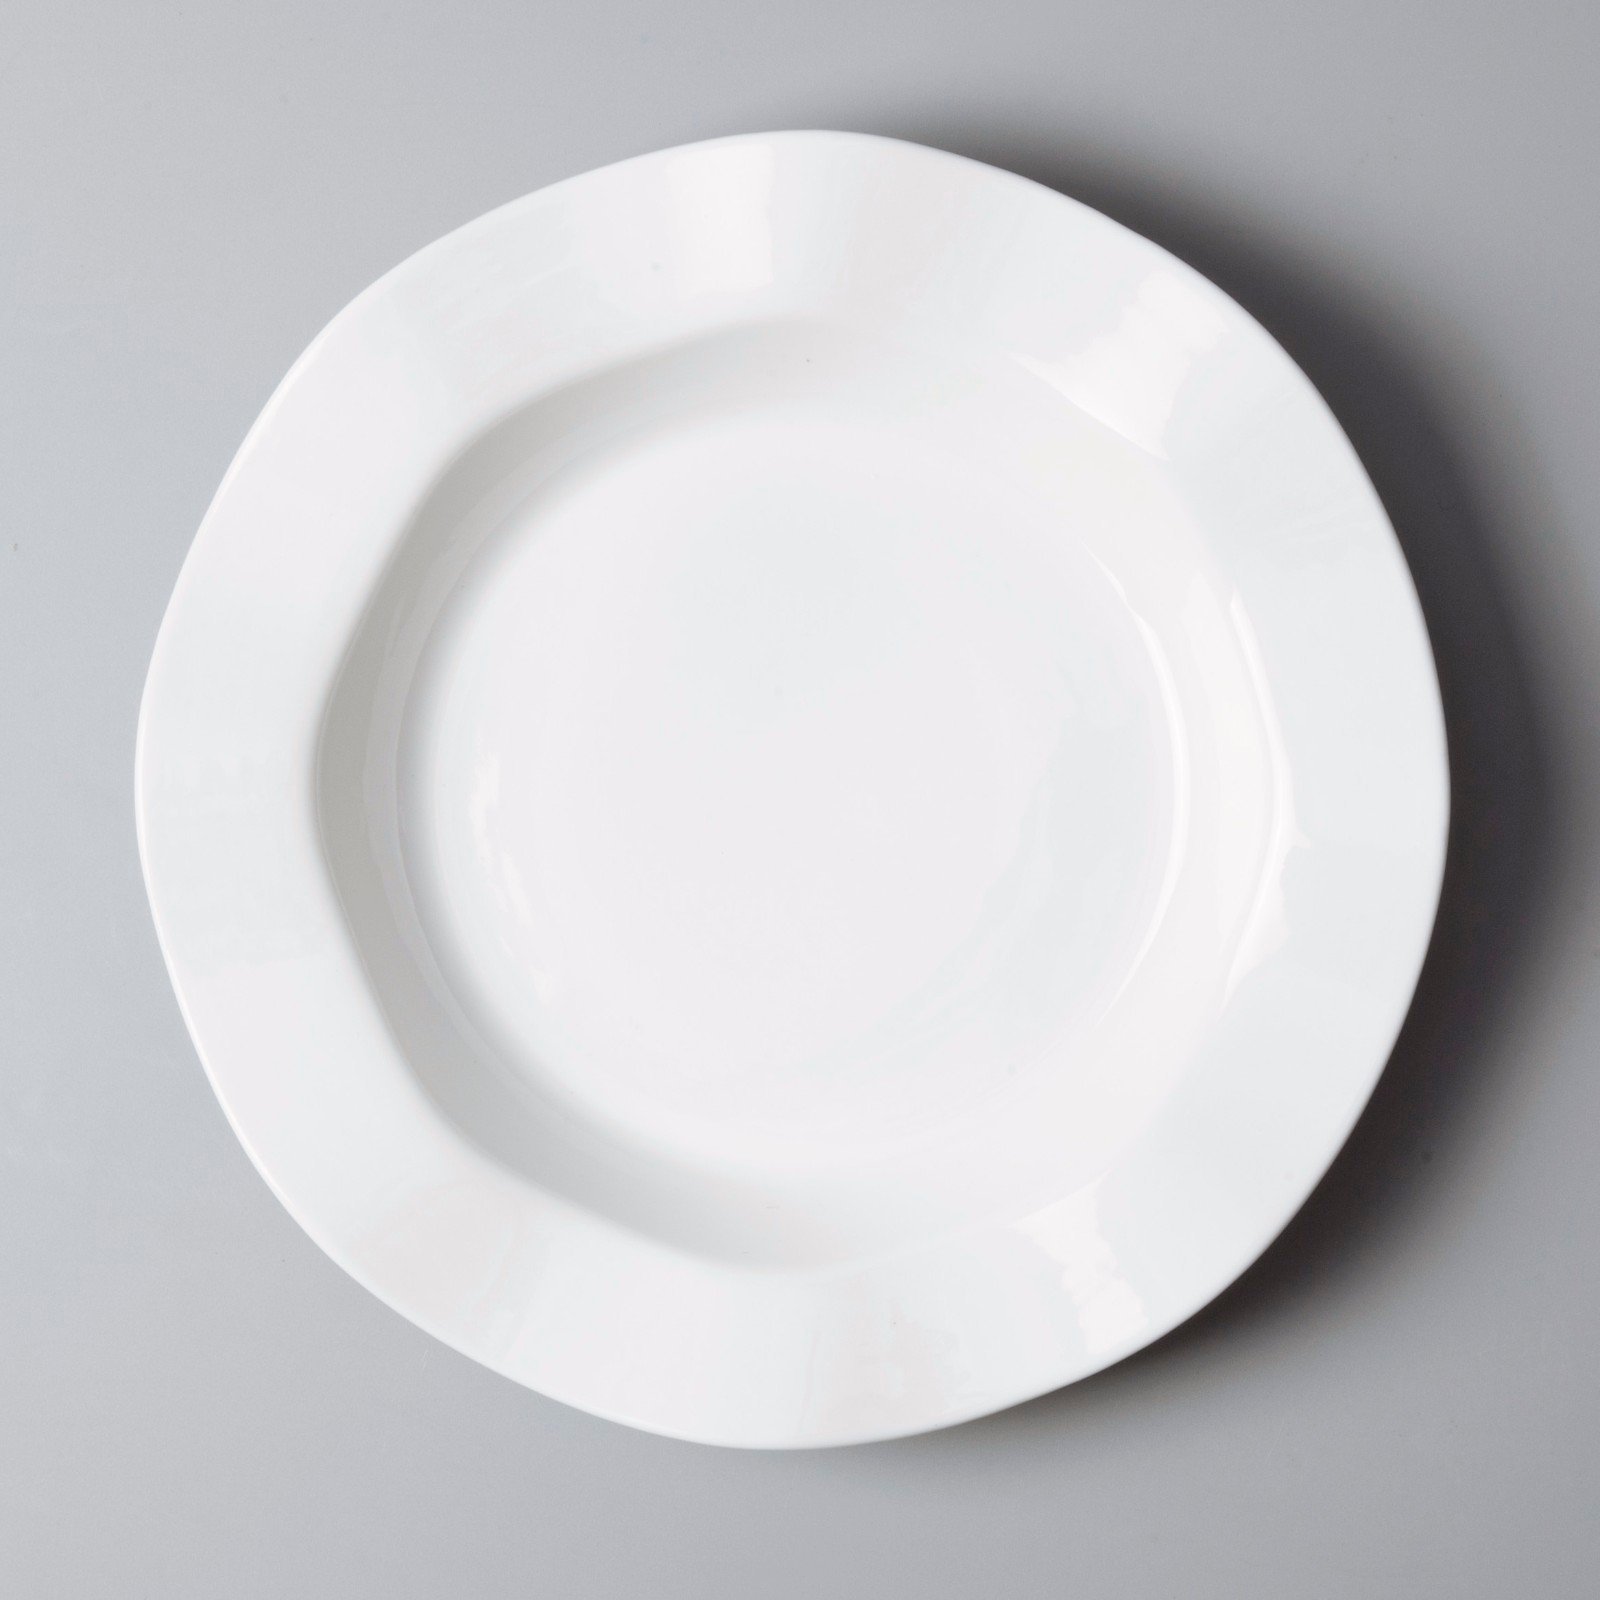 square restaurant dinner plates cheap series for home